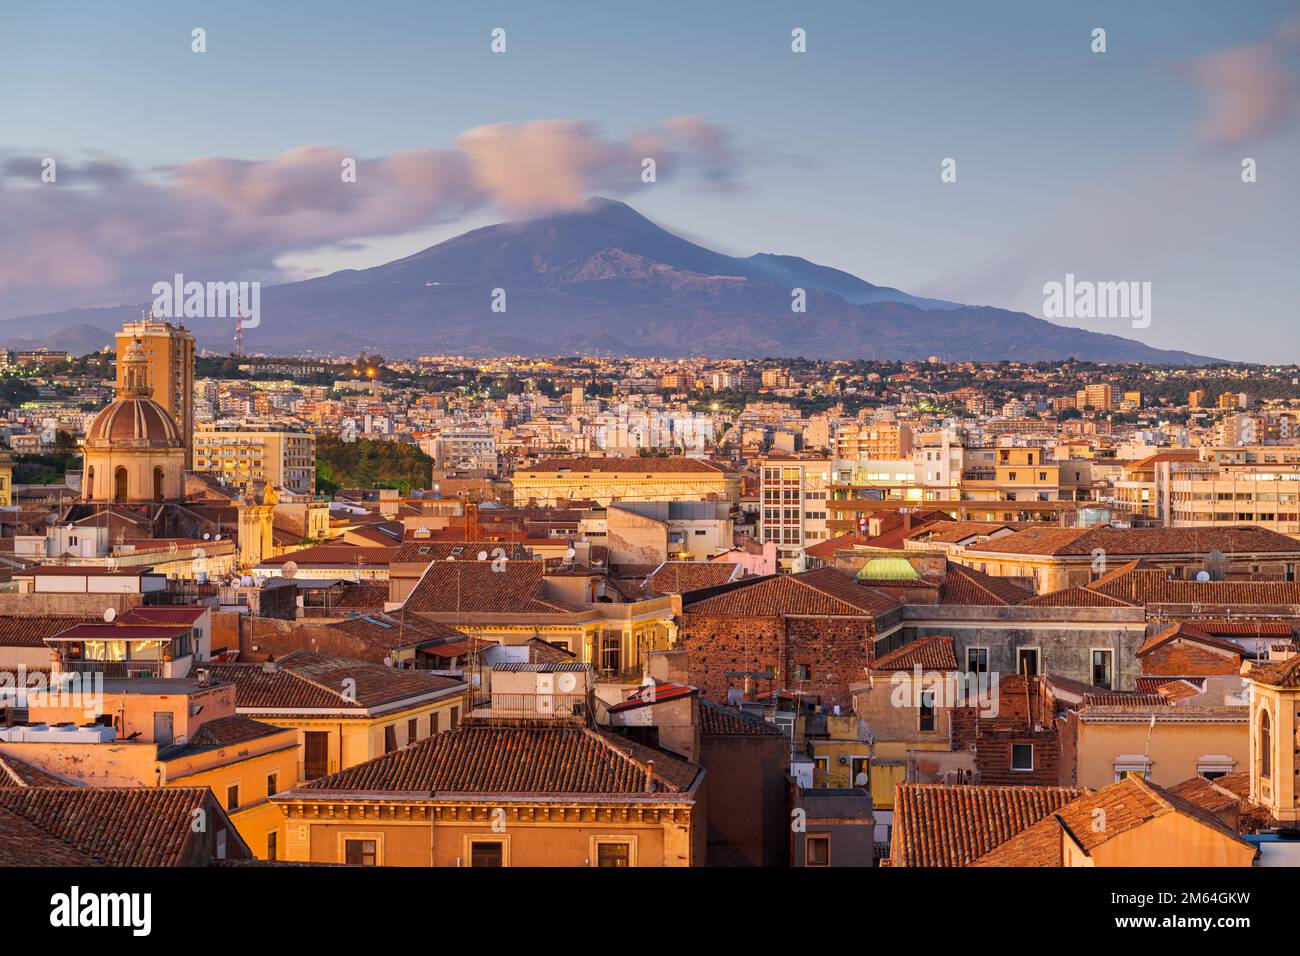 Catania, Sicily, Italy skyline with Mt. Etna at dusk. Stock Photo